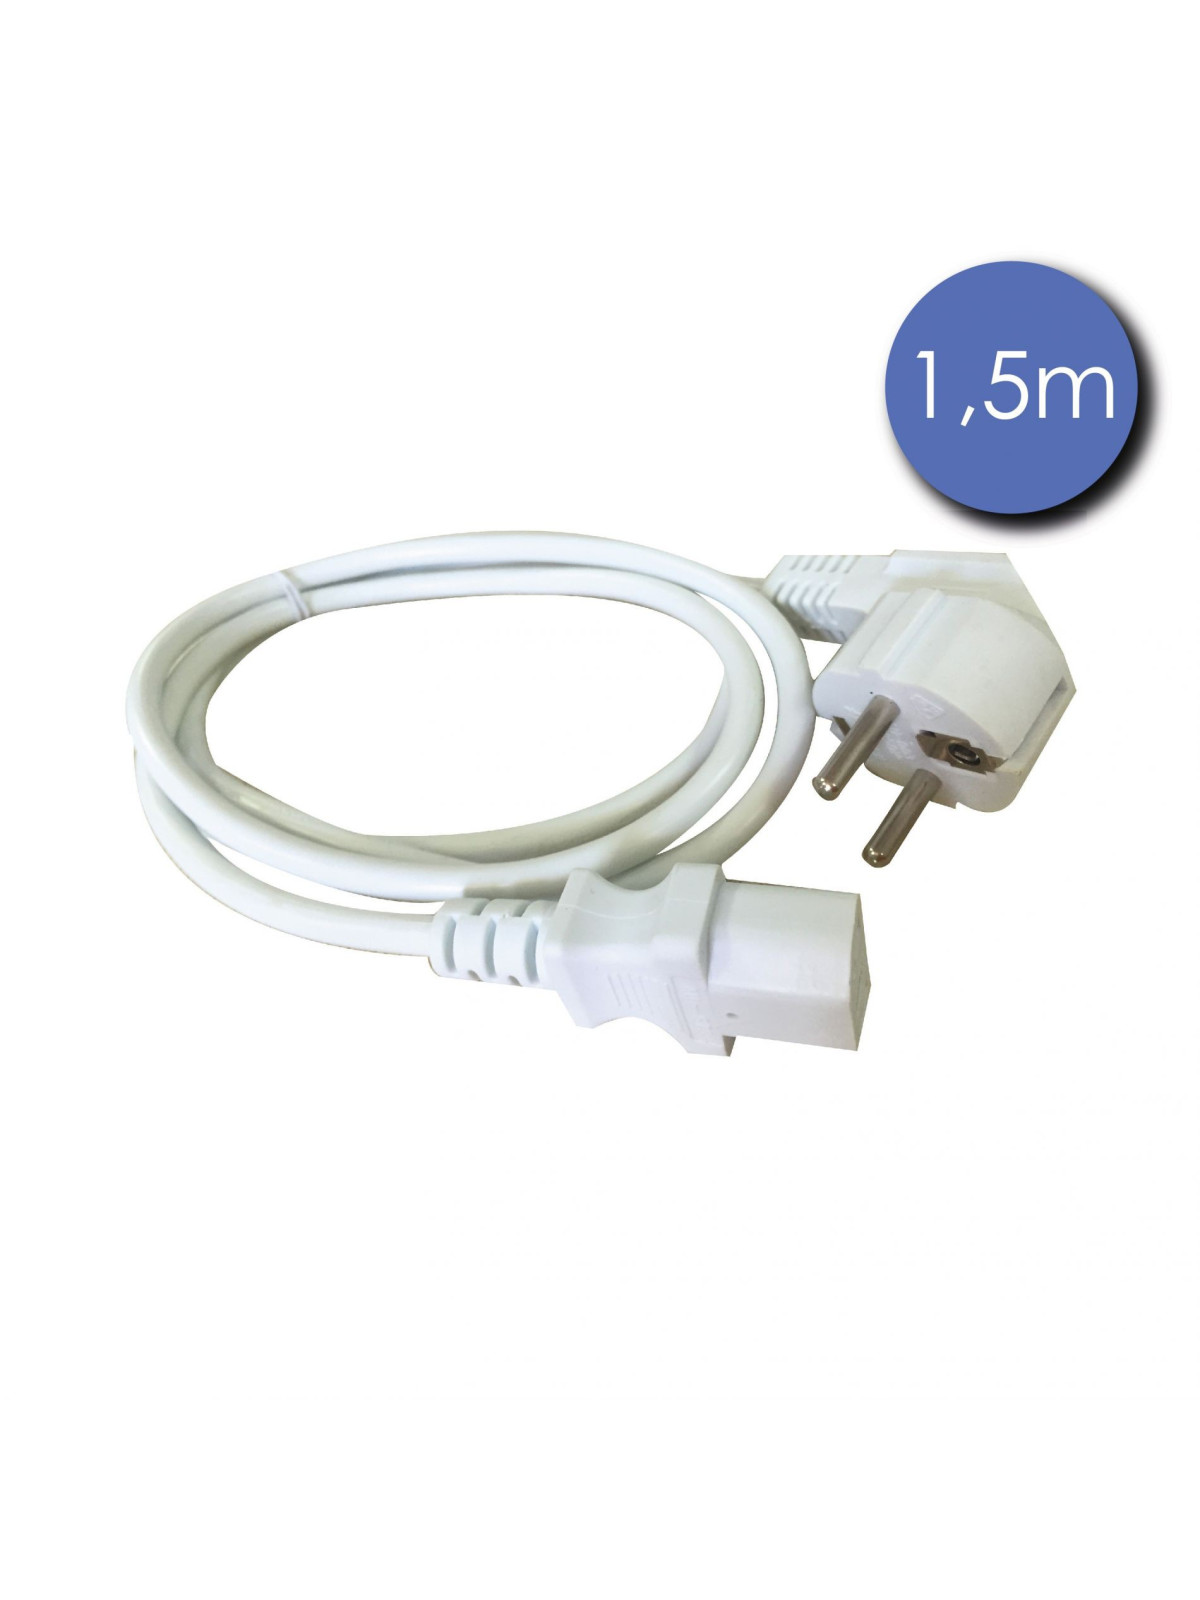 Câble Alim Mâle/IEC F 1.5m blanc